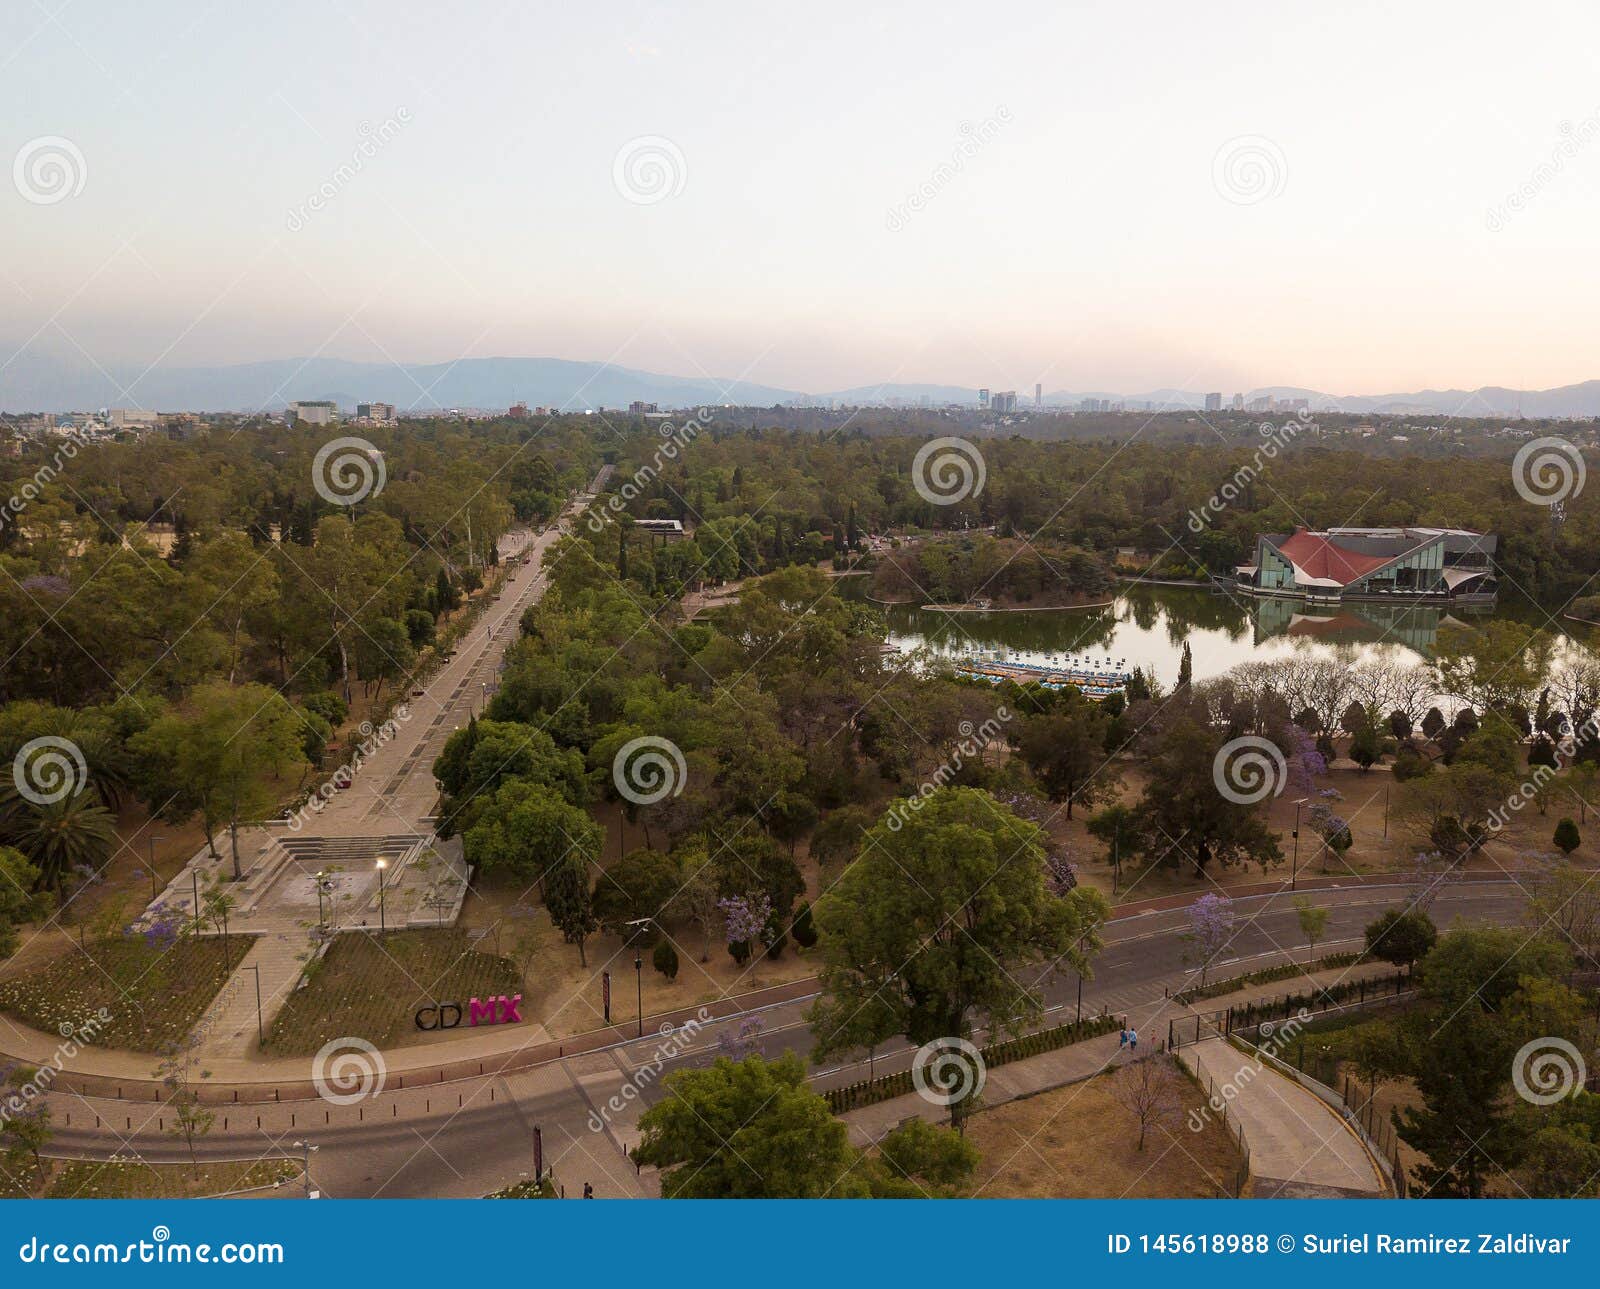 mexico city - panoramic view chapultepec